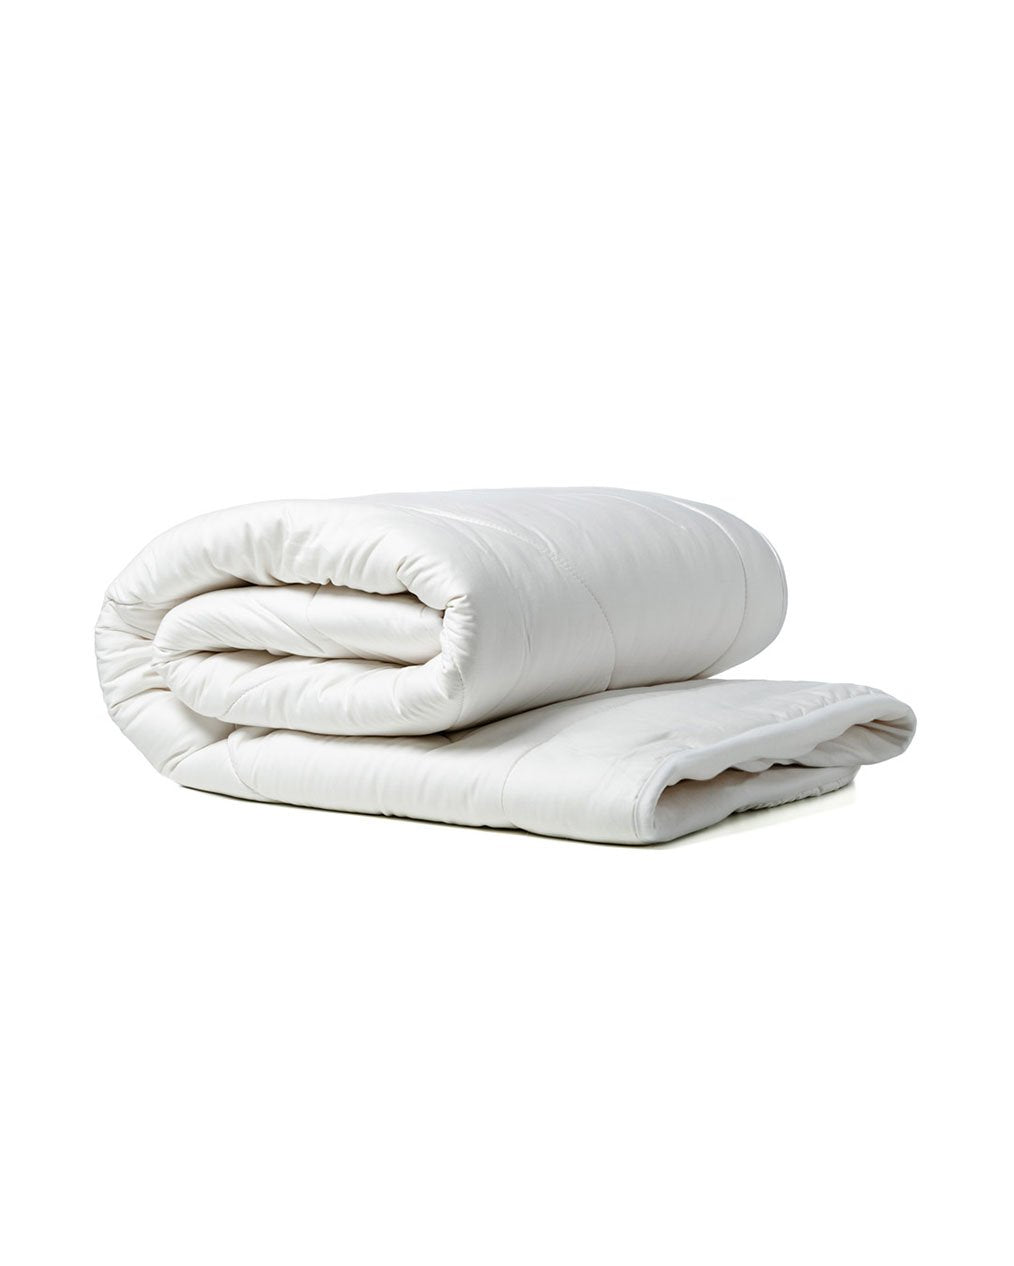 MiniJumbuk Sleep Restful Mattress Topper - Cotton Casing Side